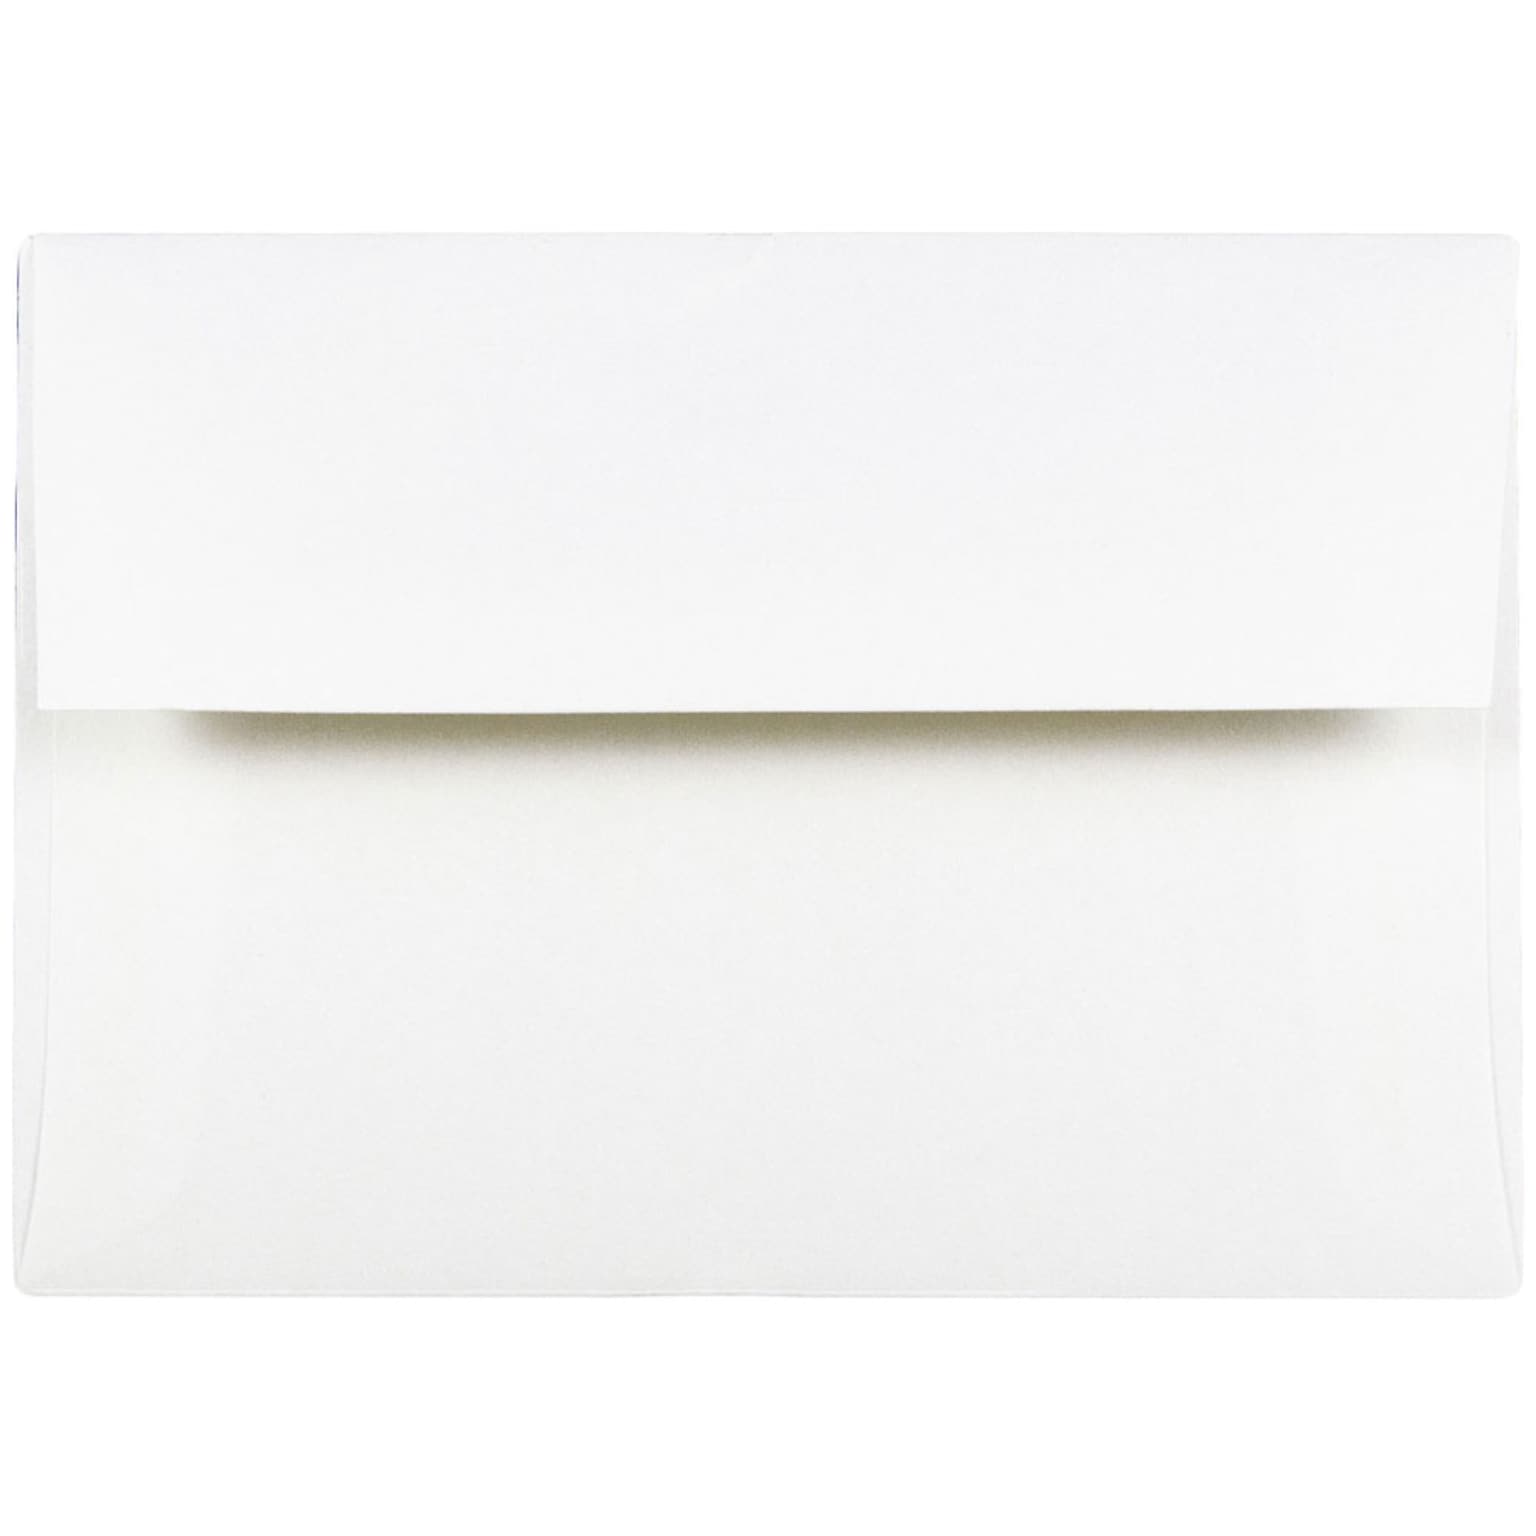 JAM Paper A7 Strathmore Invitation Envelopes, 5.25 x 7.25, Bright White Wove, 50/Pack (STTW711I)